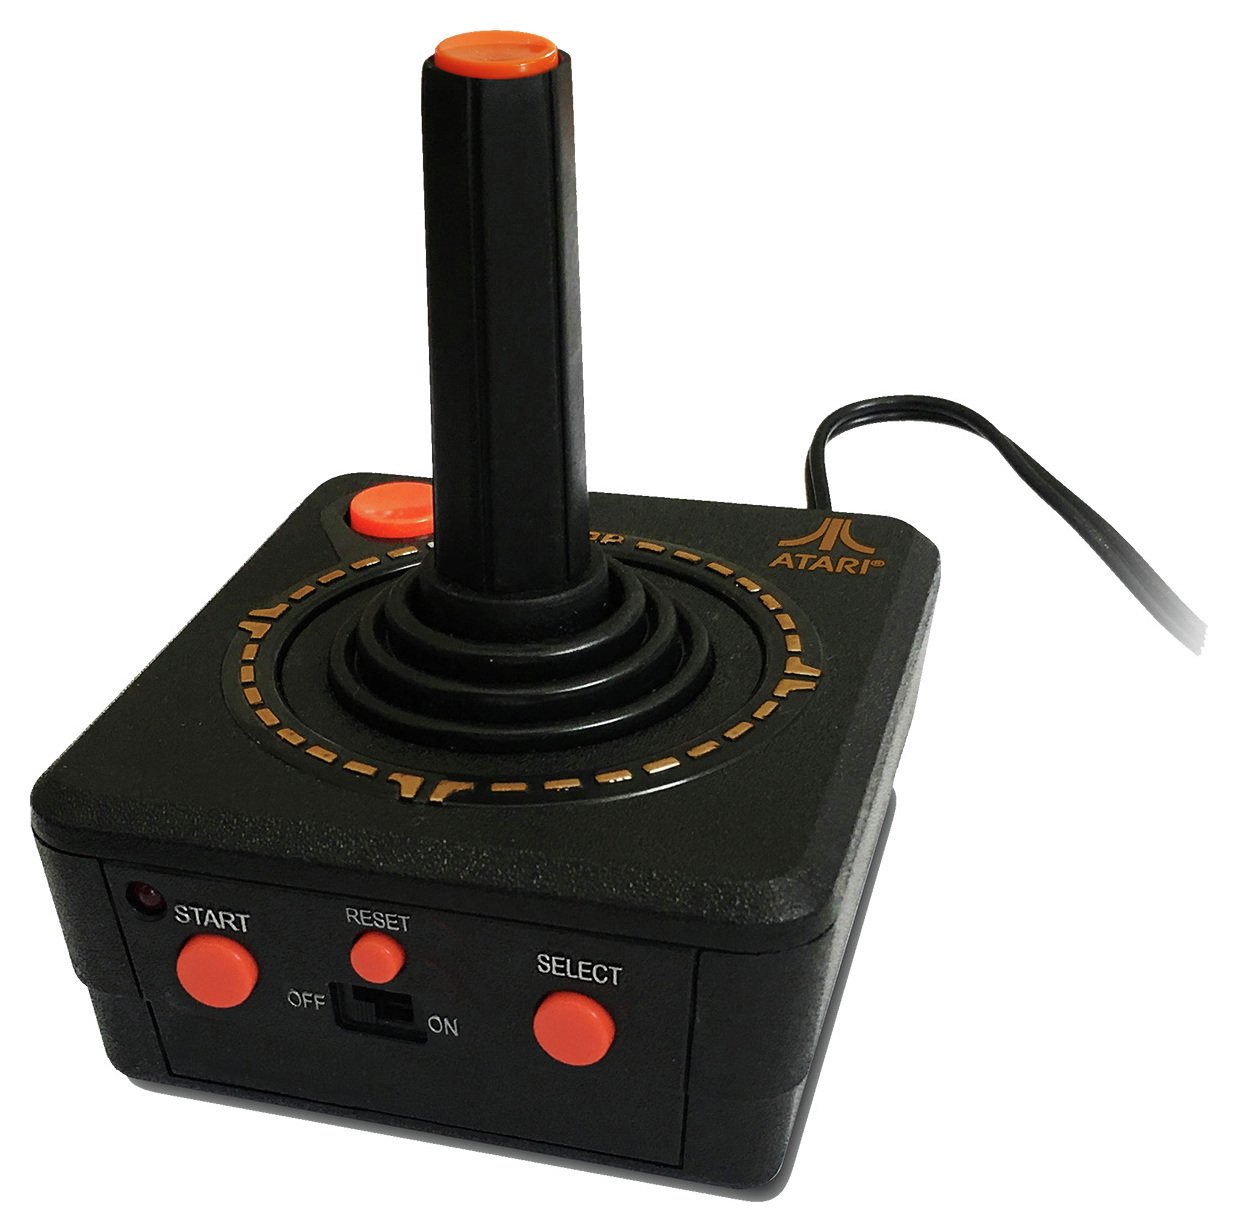 Atari Retro Console TV Plug and Play Review